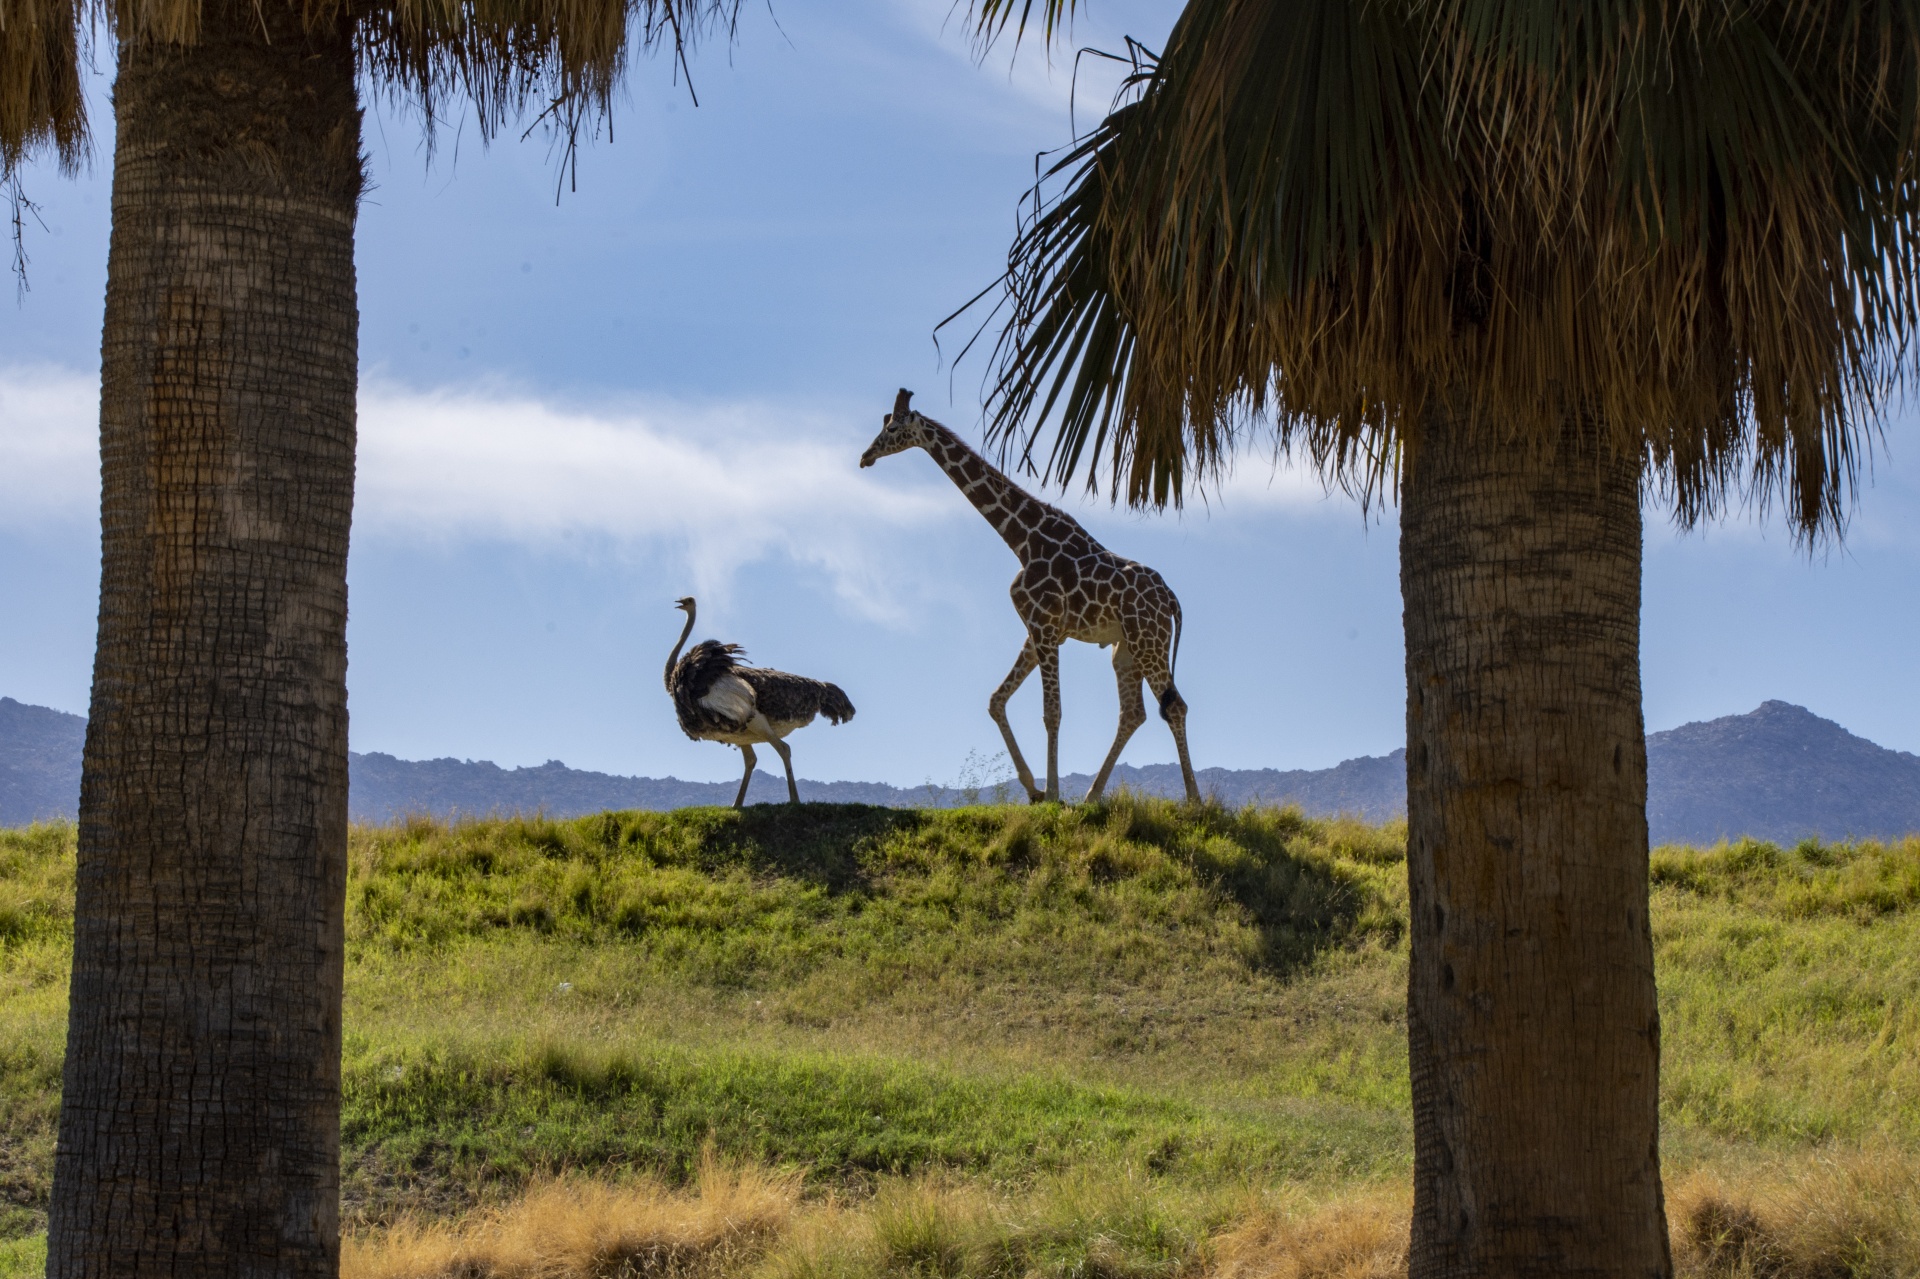 Girafa e avestruz